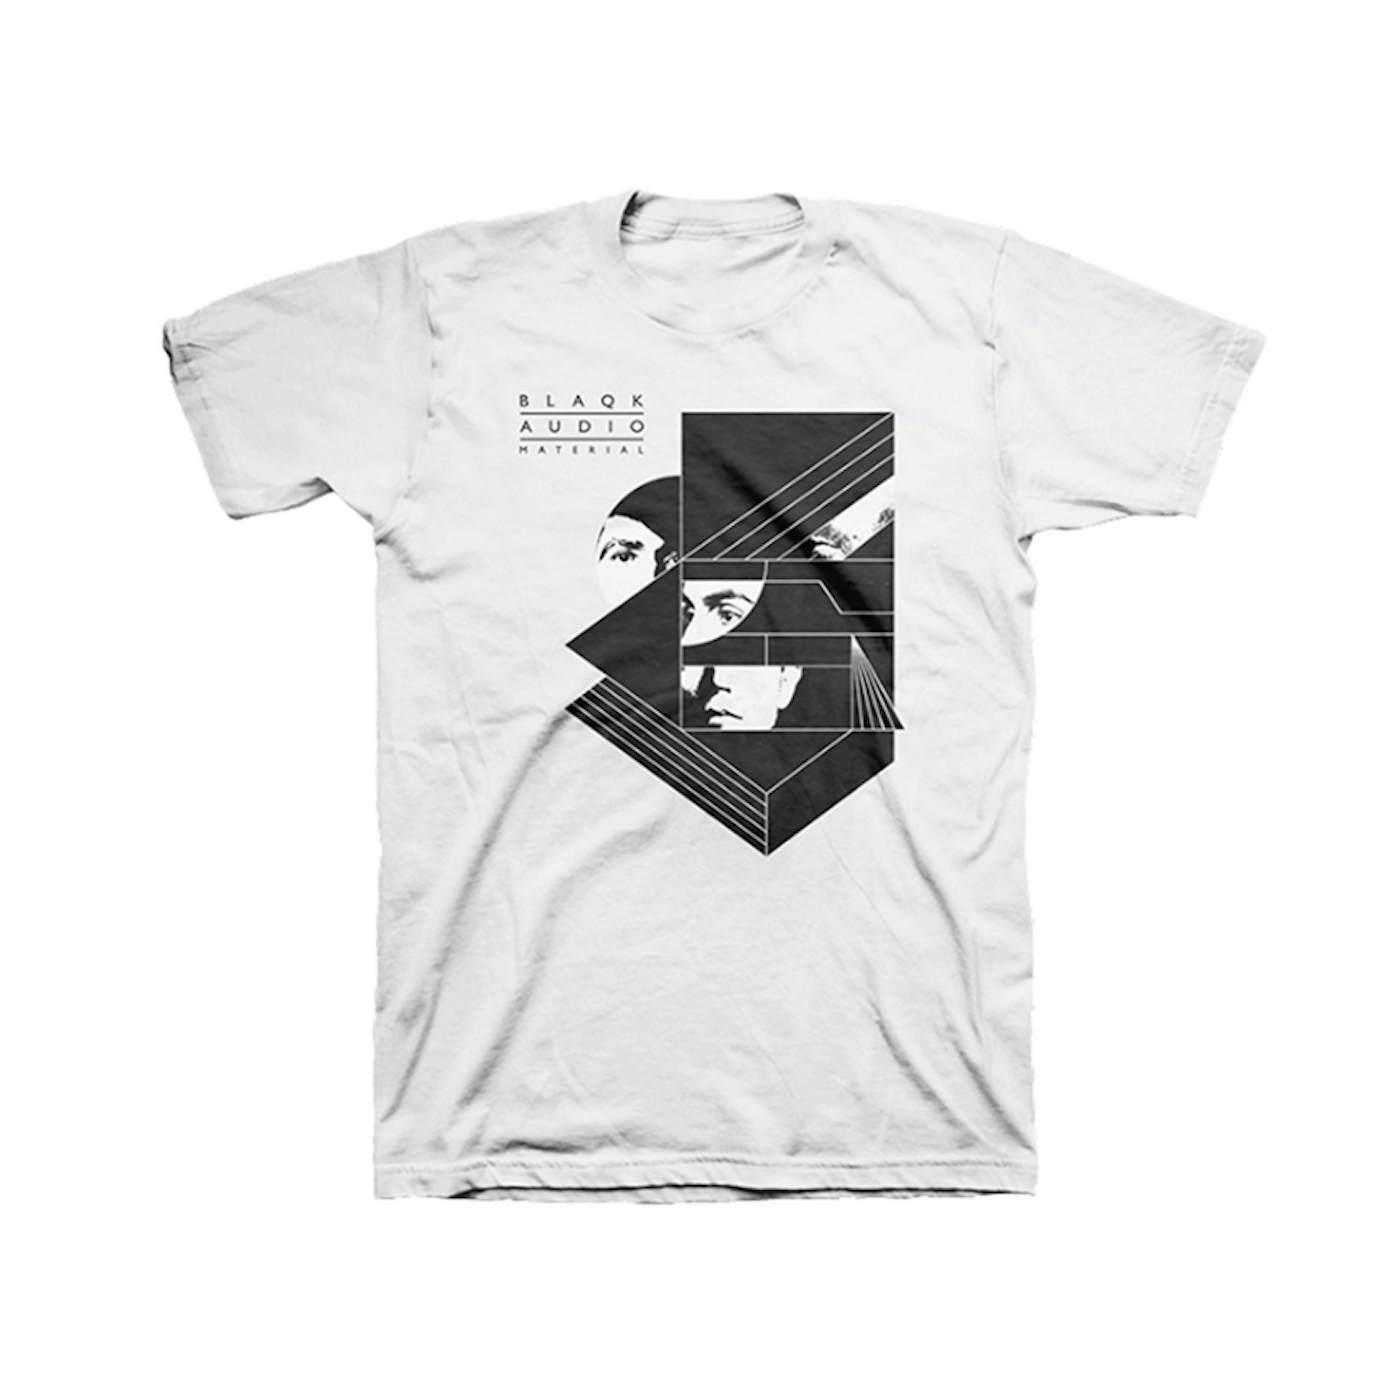 Blaqk Audio Material T-Shirt